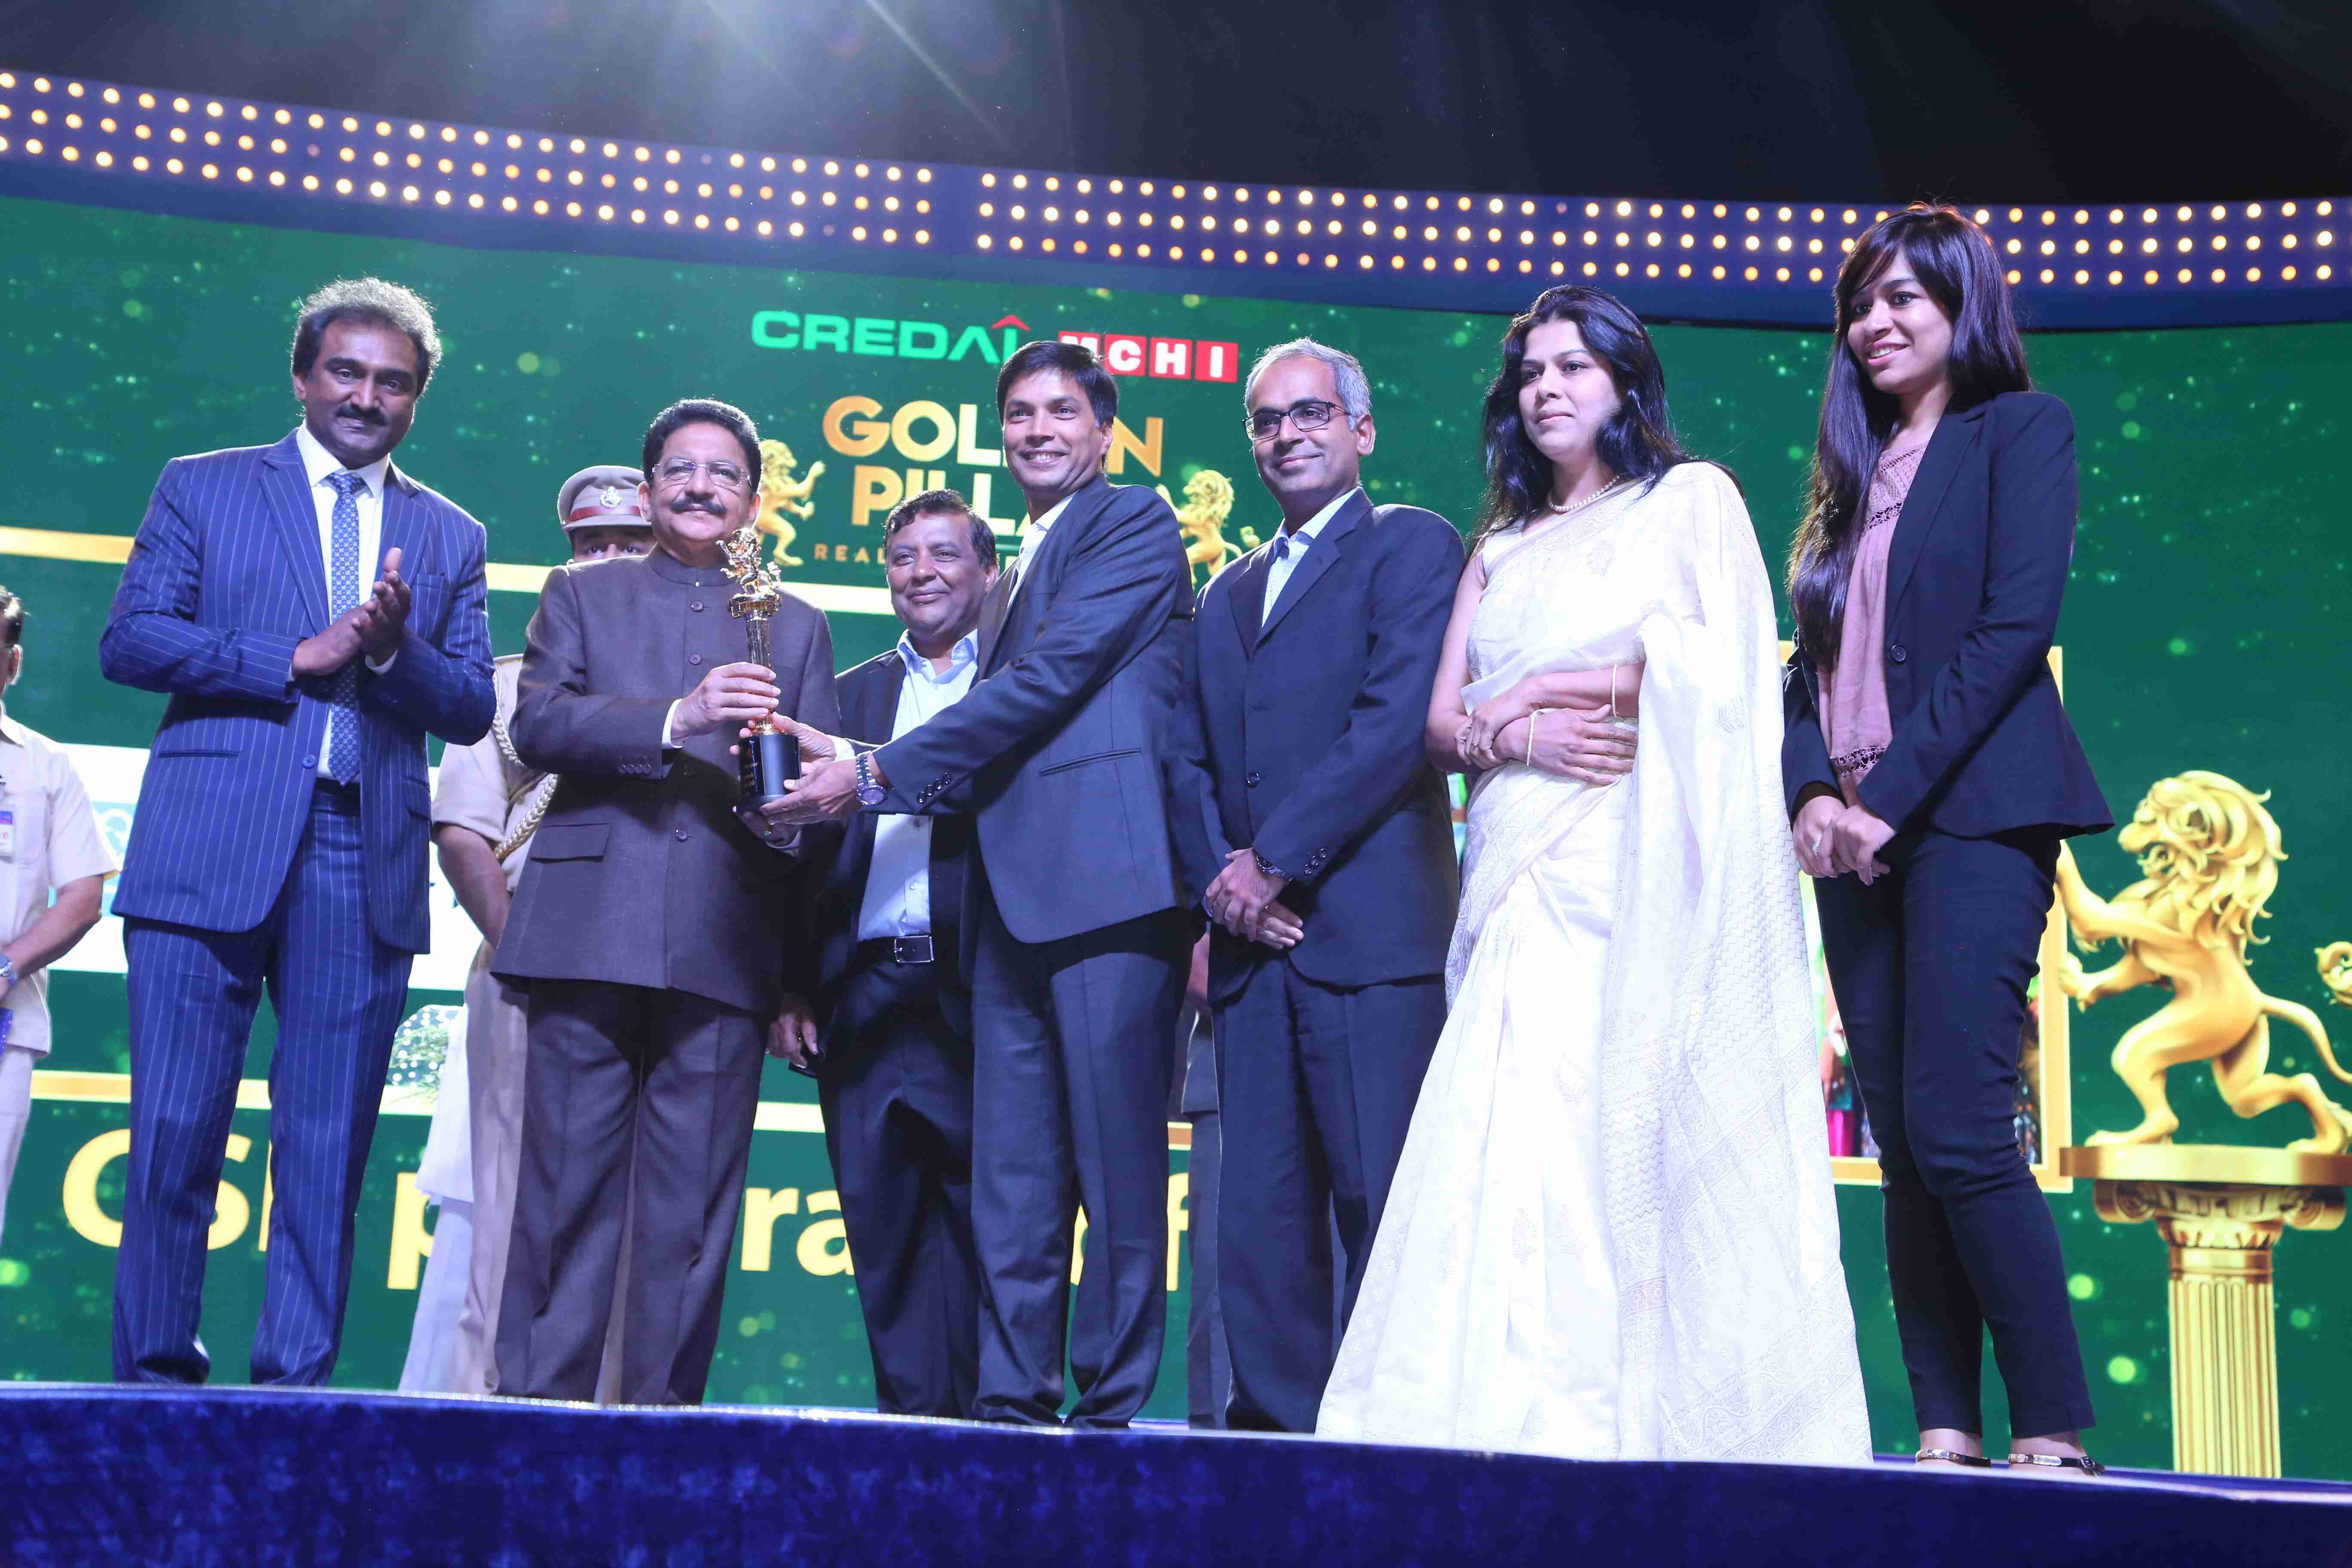 Kalpataru awarded CREDAI MCHI Golden Pillar Award 2018 Update